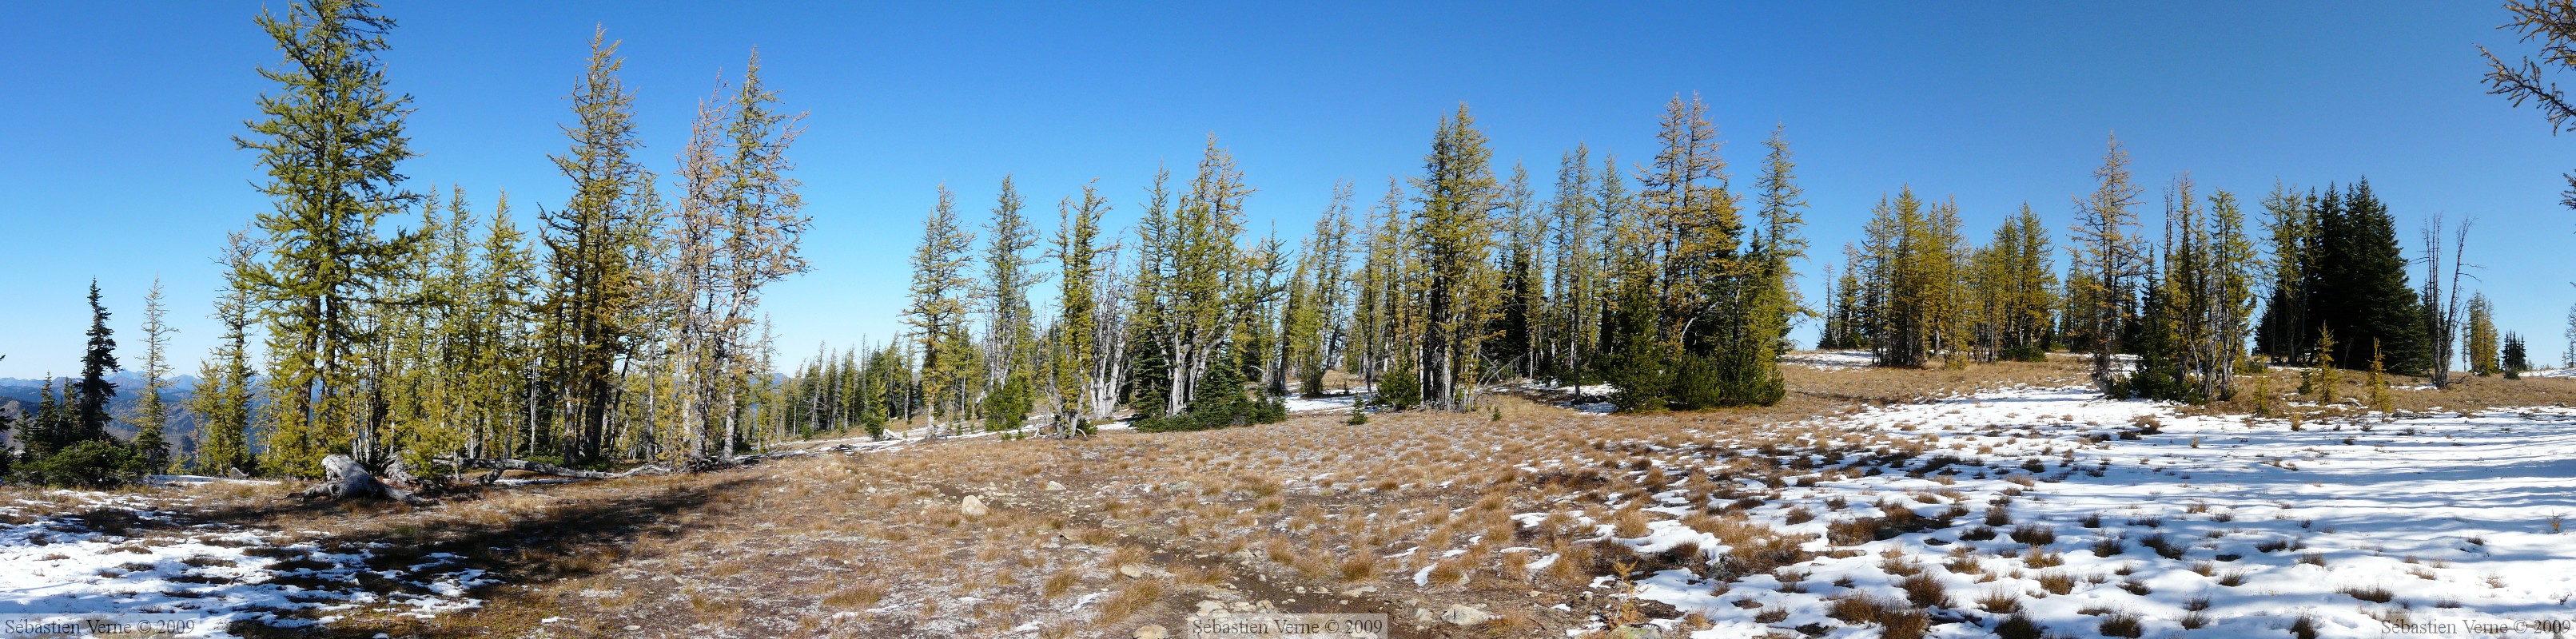 Frosty Mountain panorama 3.jpg